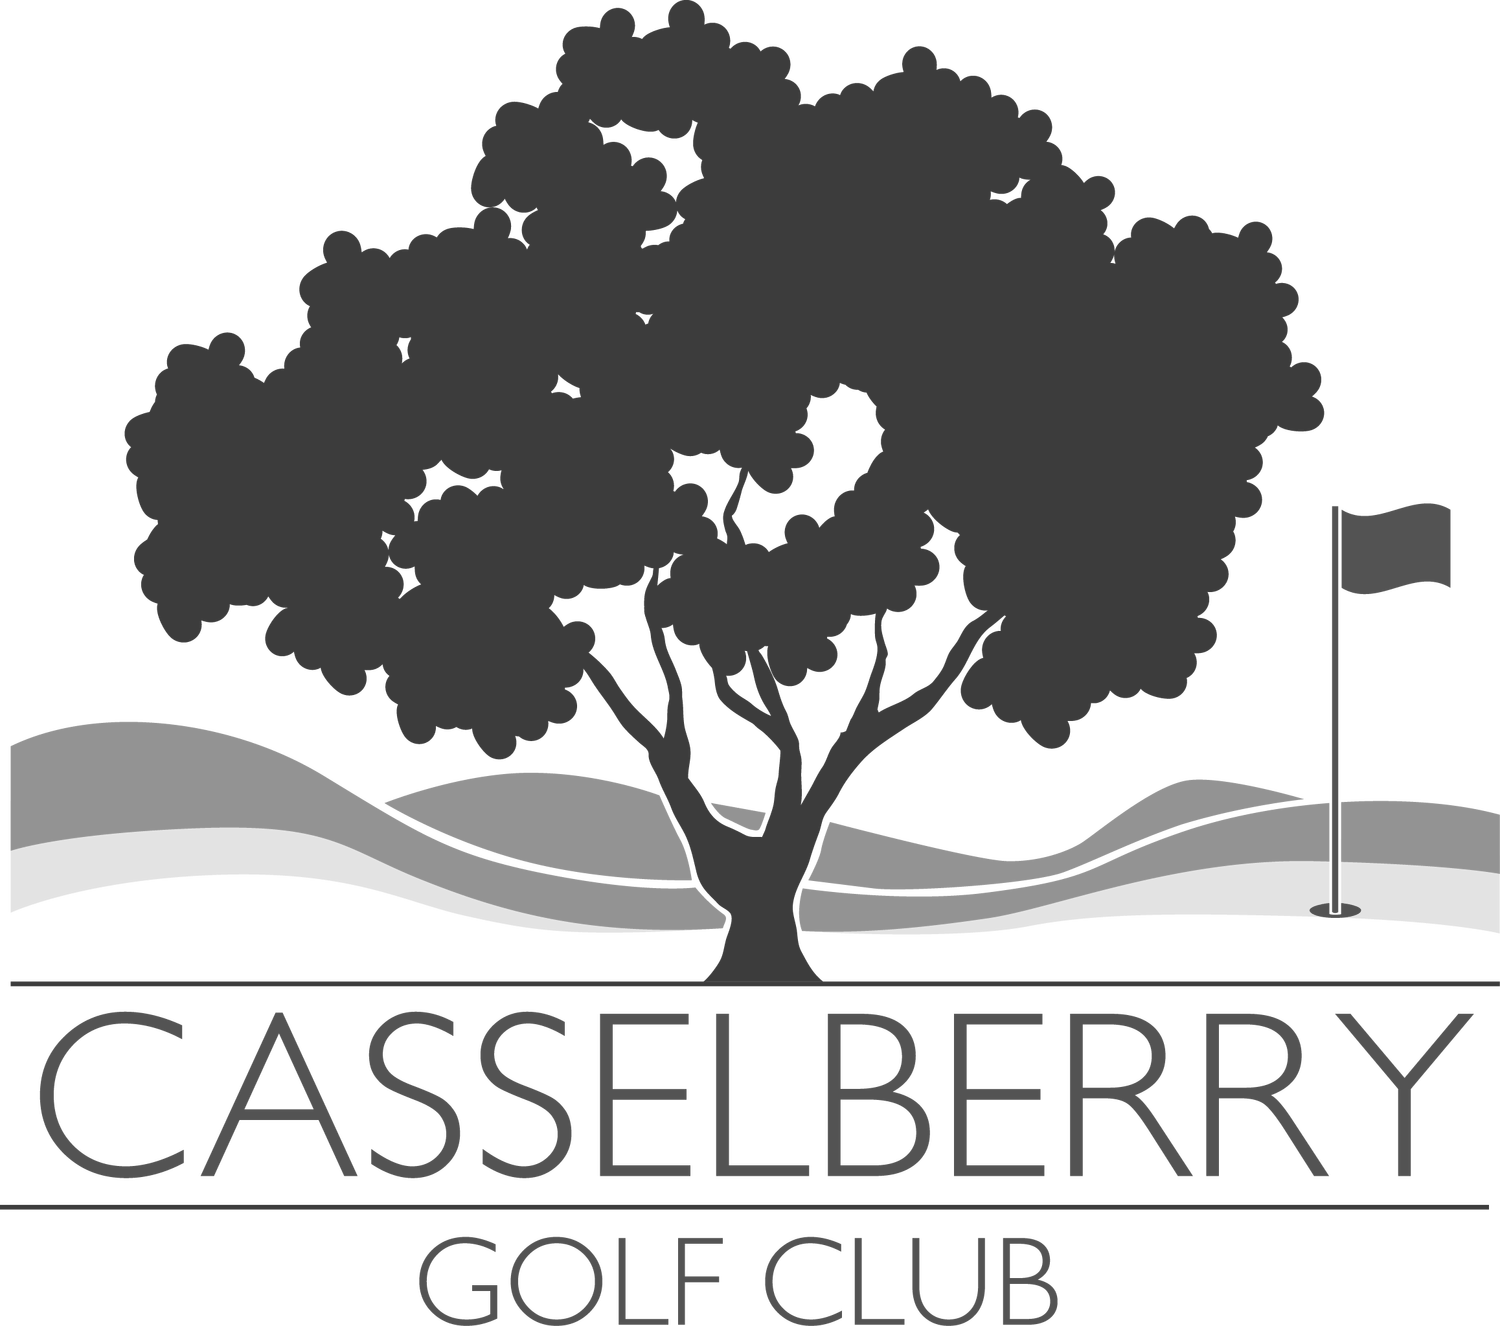 Casselberry Golf